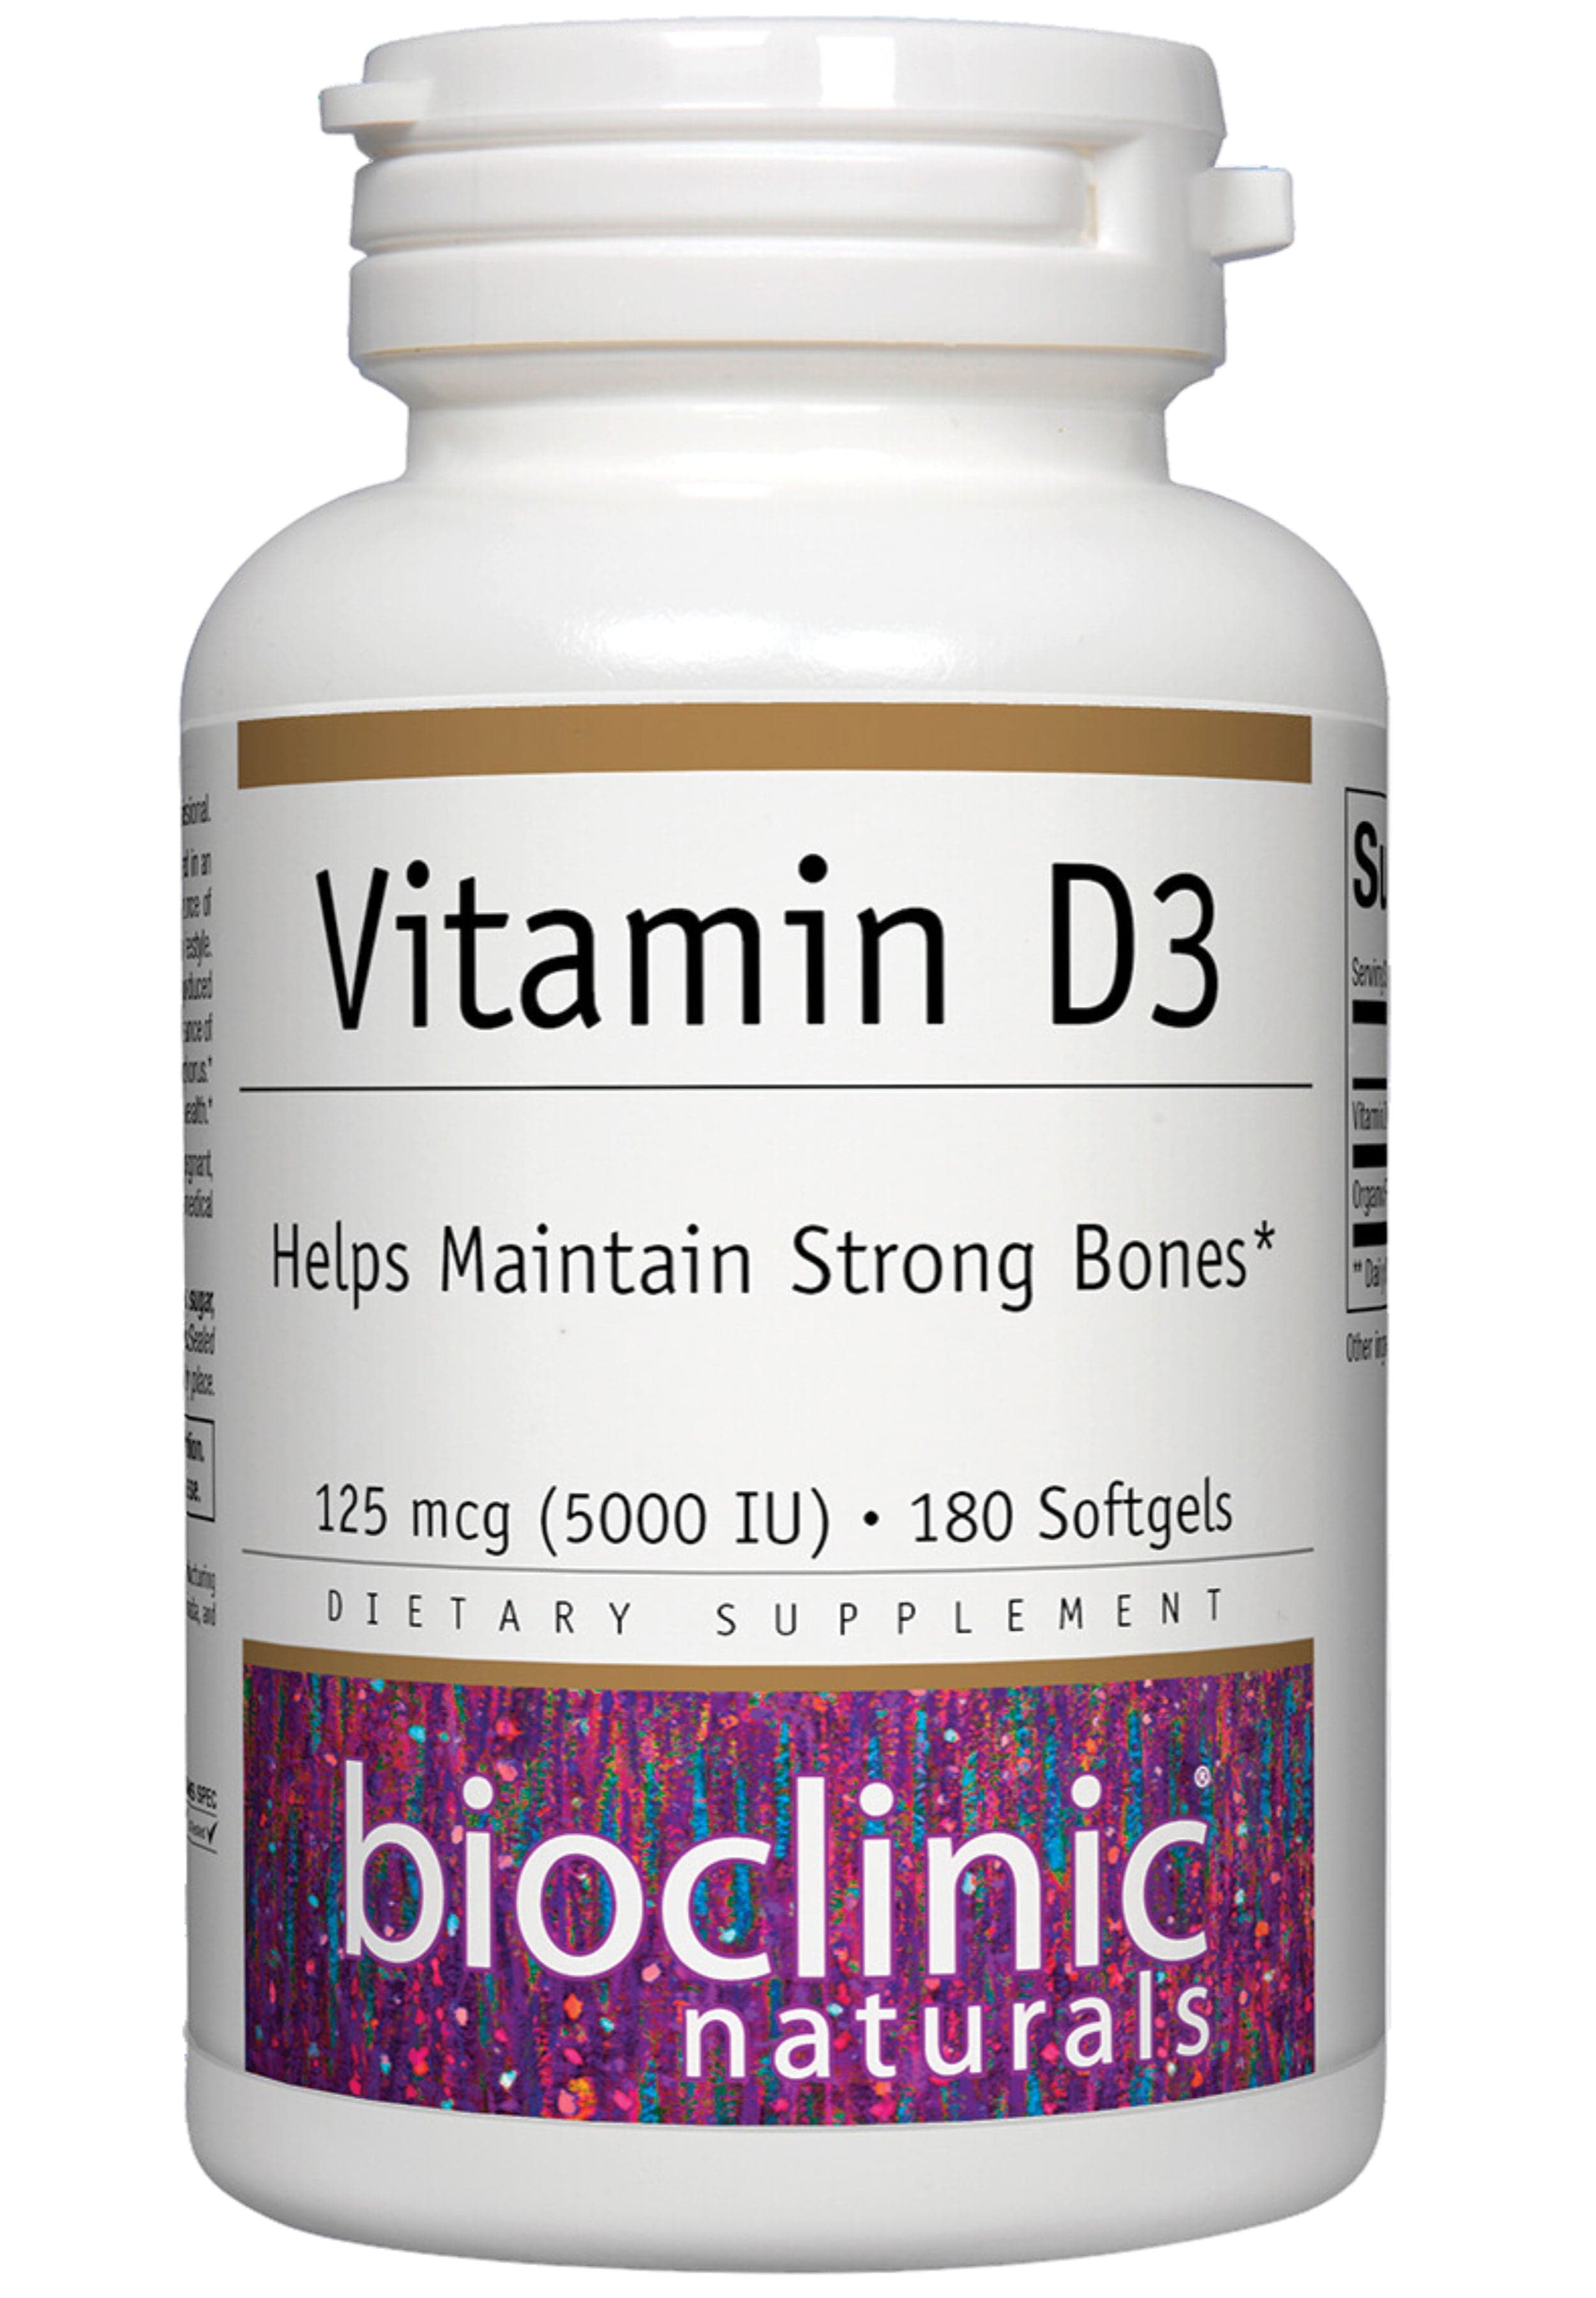 Bioclinic Naturals Vitamin D3 125 mcg (5000 IU)